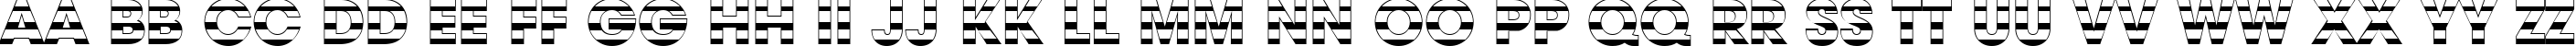 Пример написания английского алфавита шрифтом a_AvanteTitulStr Heavy